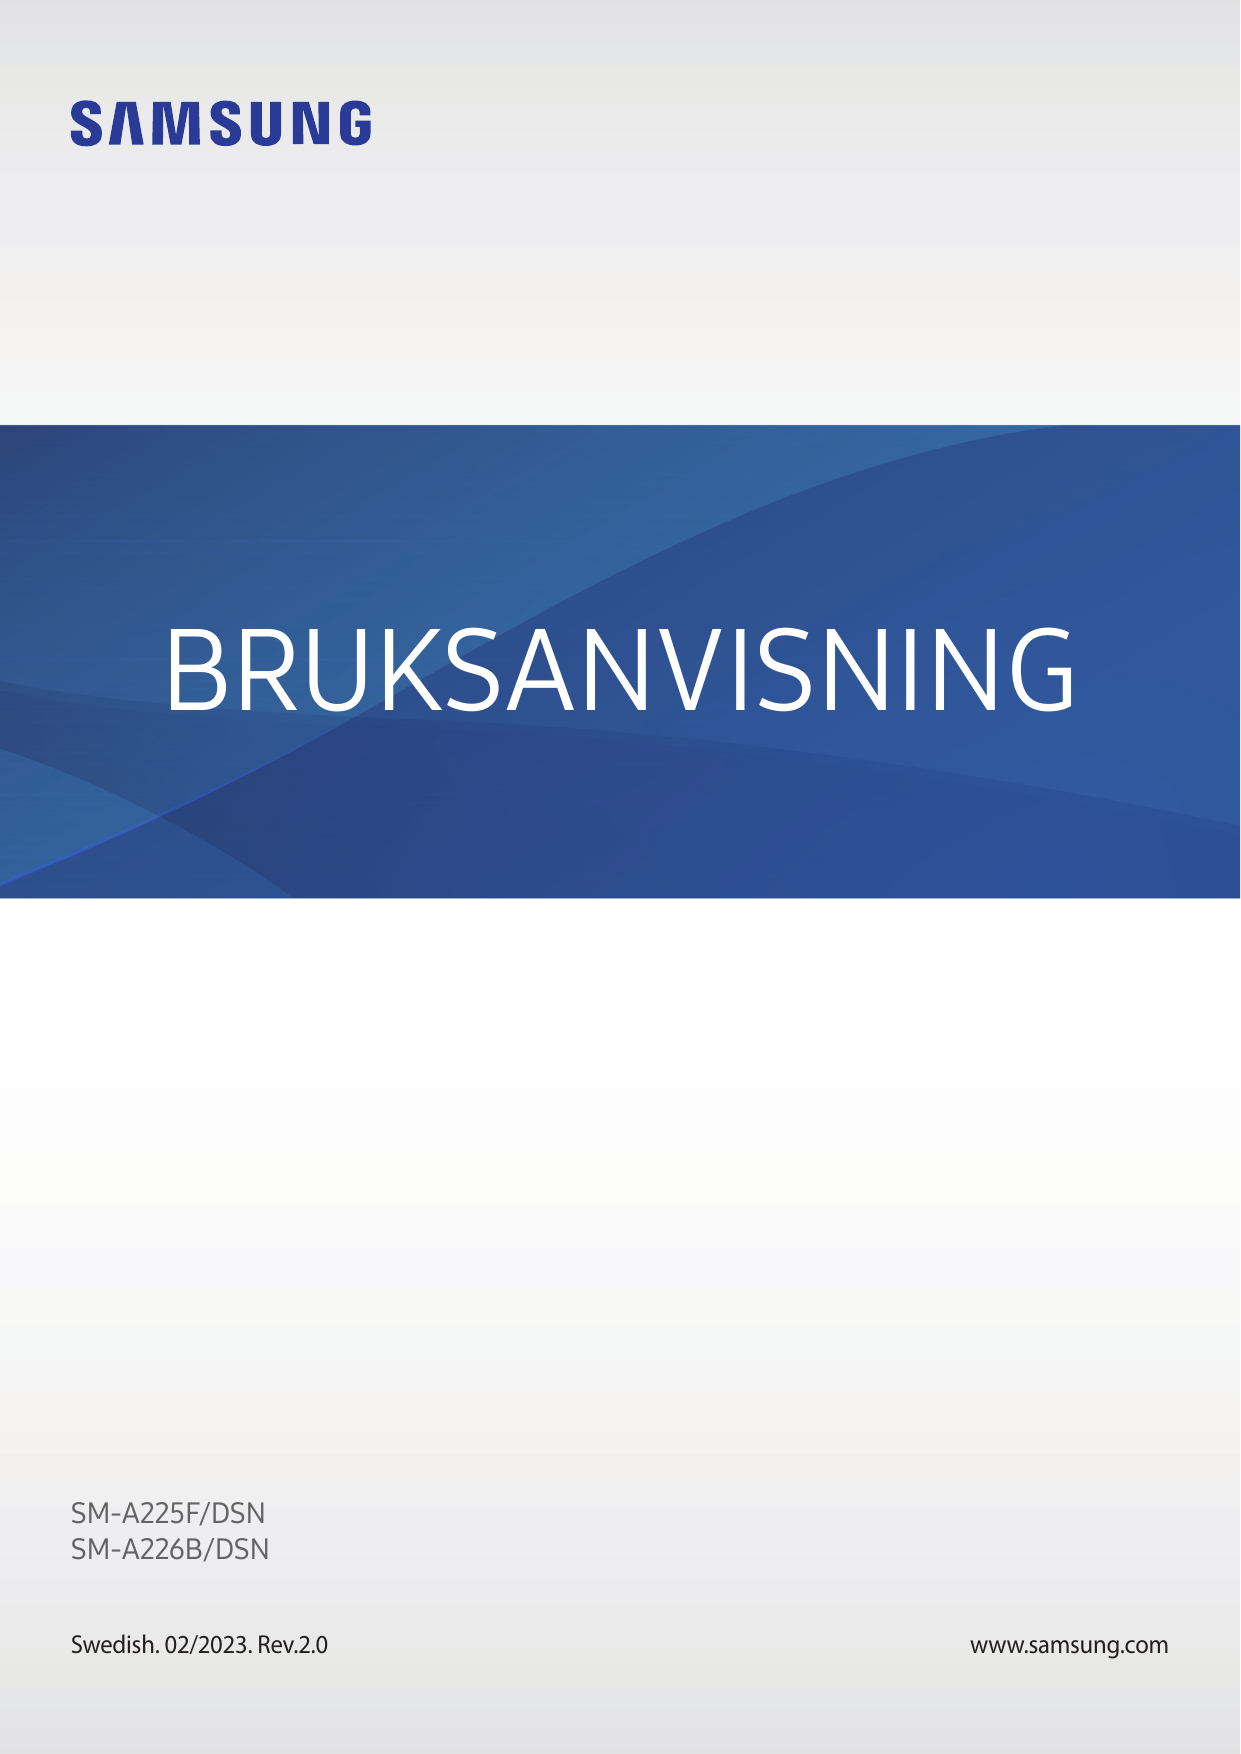 BRUKSANVISNINGSM-A225F/DSNSM-A226B/DSNSwedish. 02/2023. Rev.2.0www.samsung.com